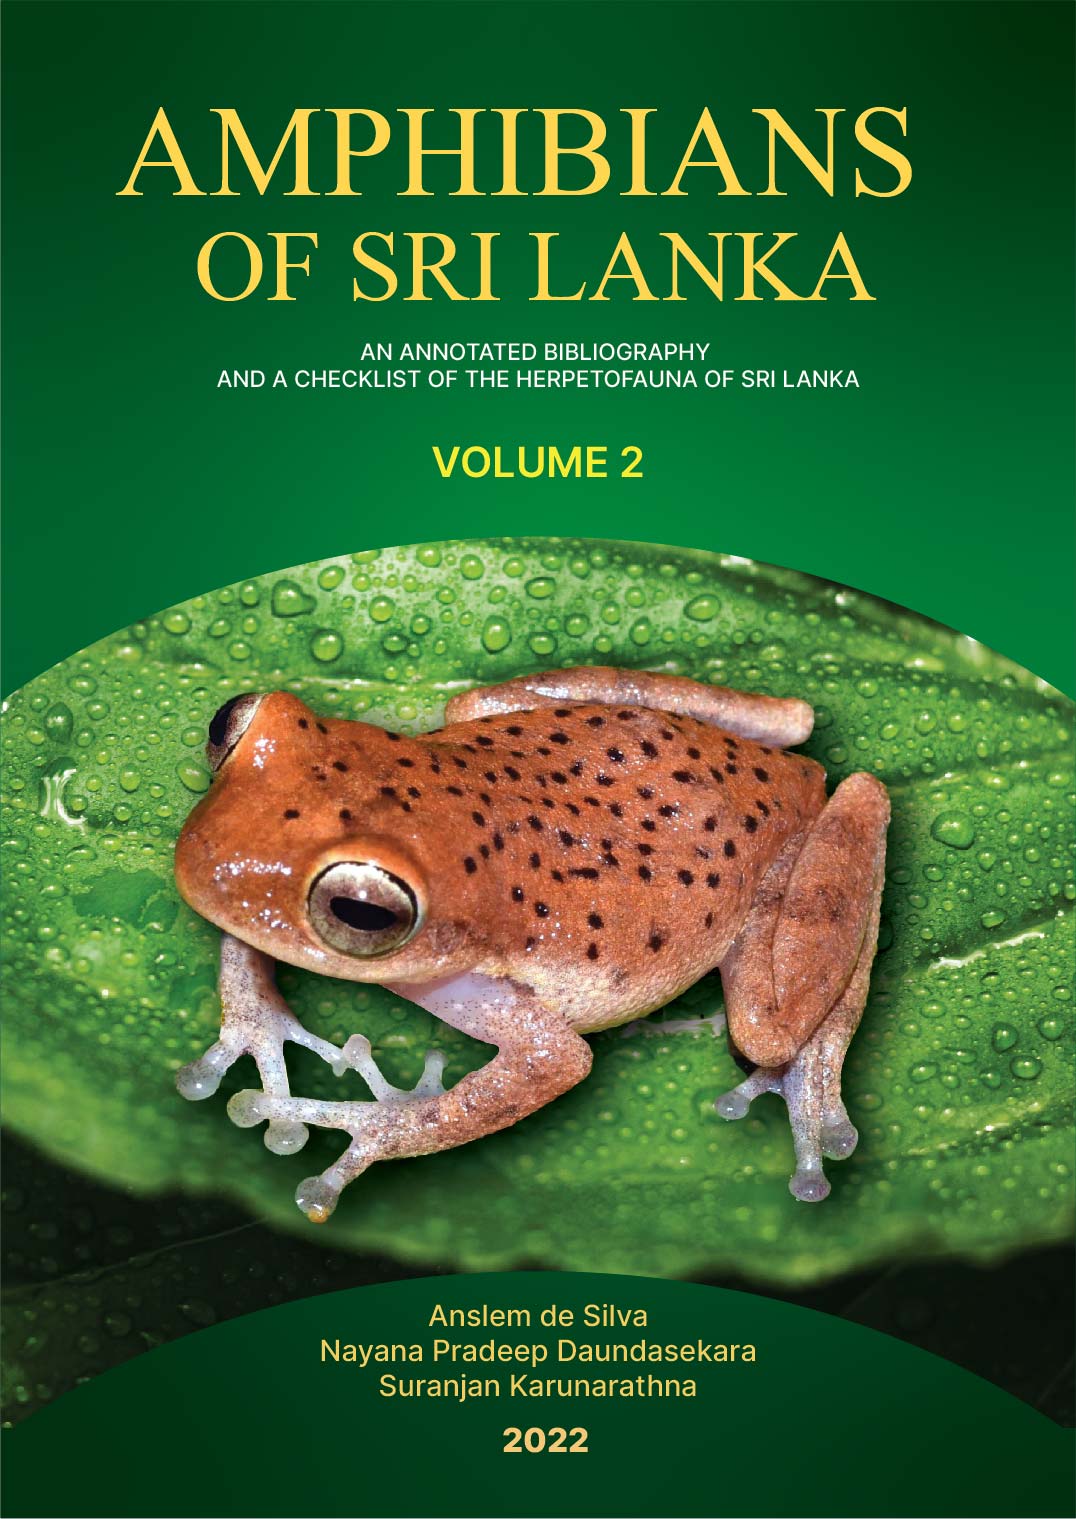 New book on Amphibians of Sri Lanka